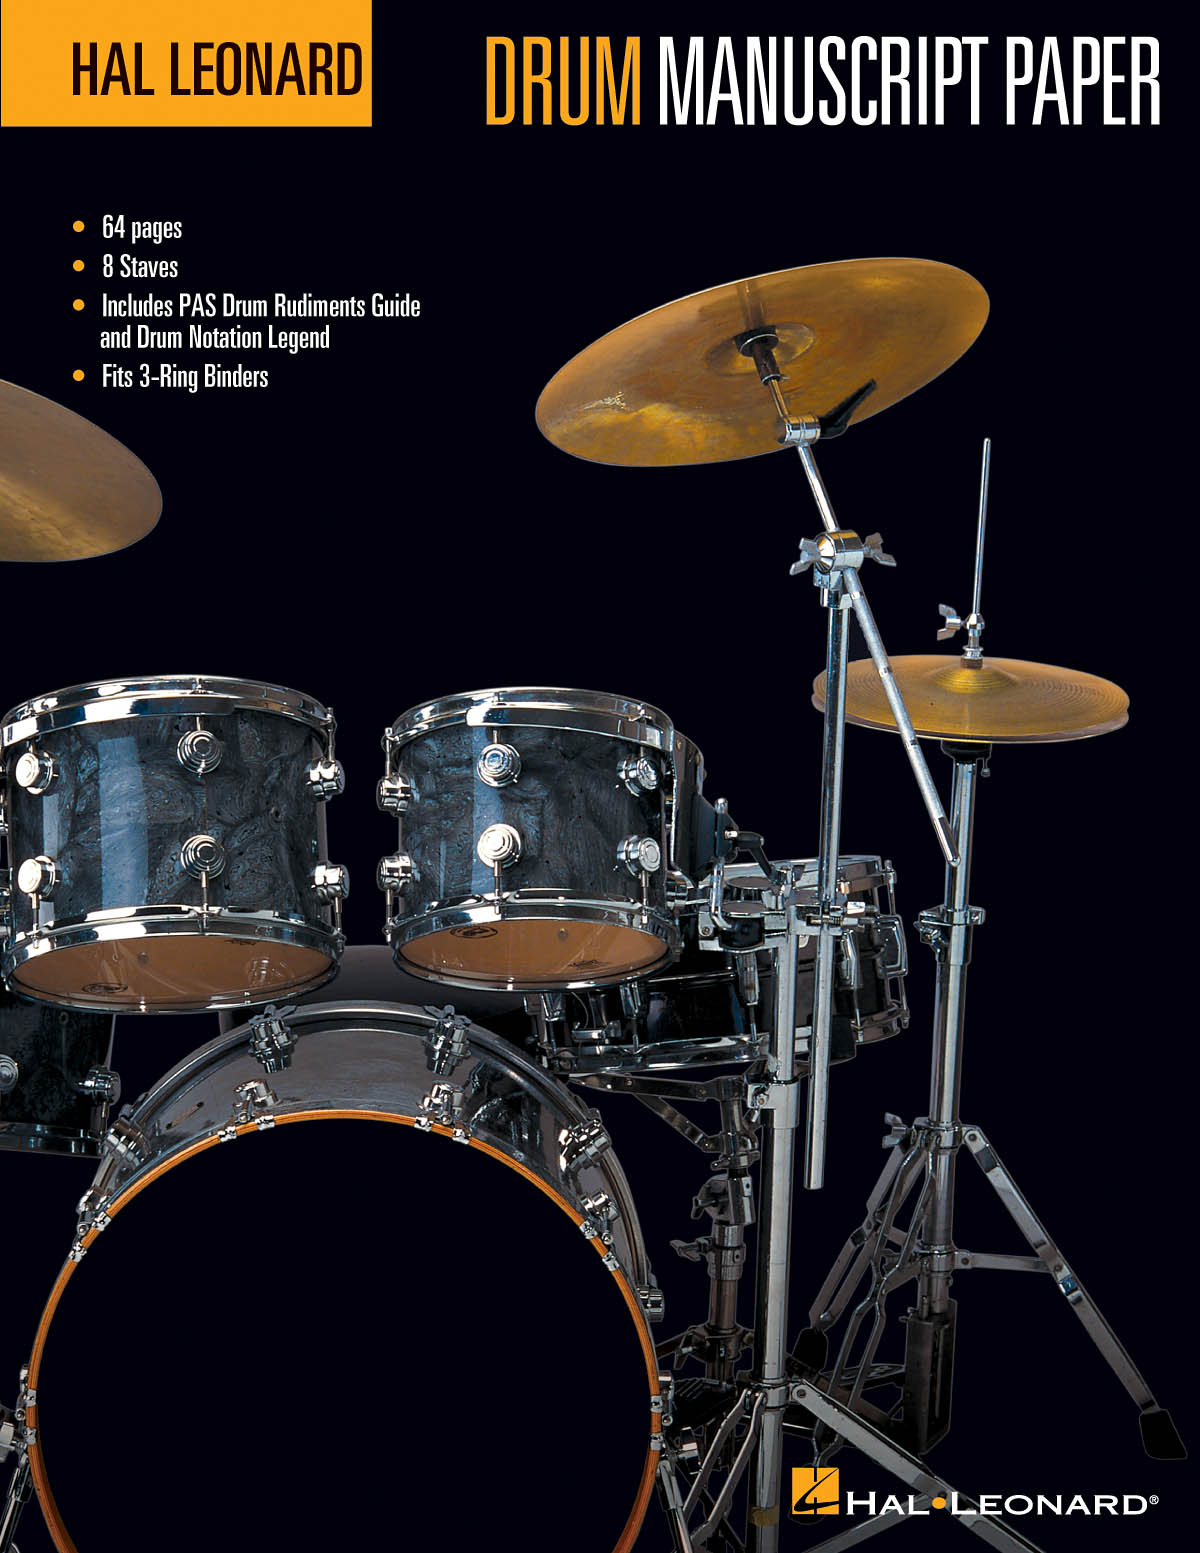 Hal Leonard Drum Manuscript Paper: Manuscript Paper: Manuscript